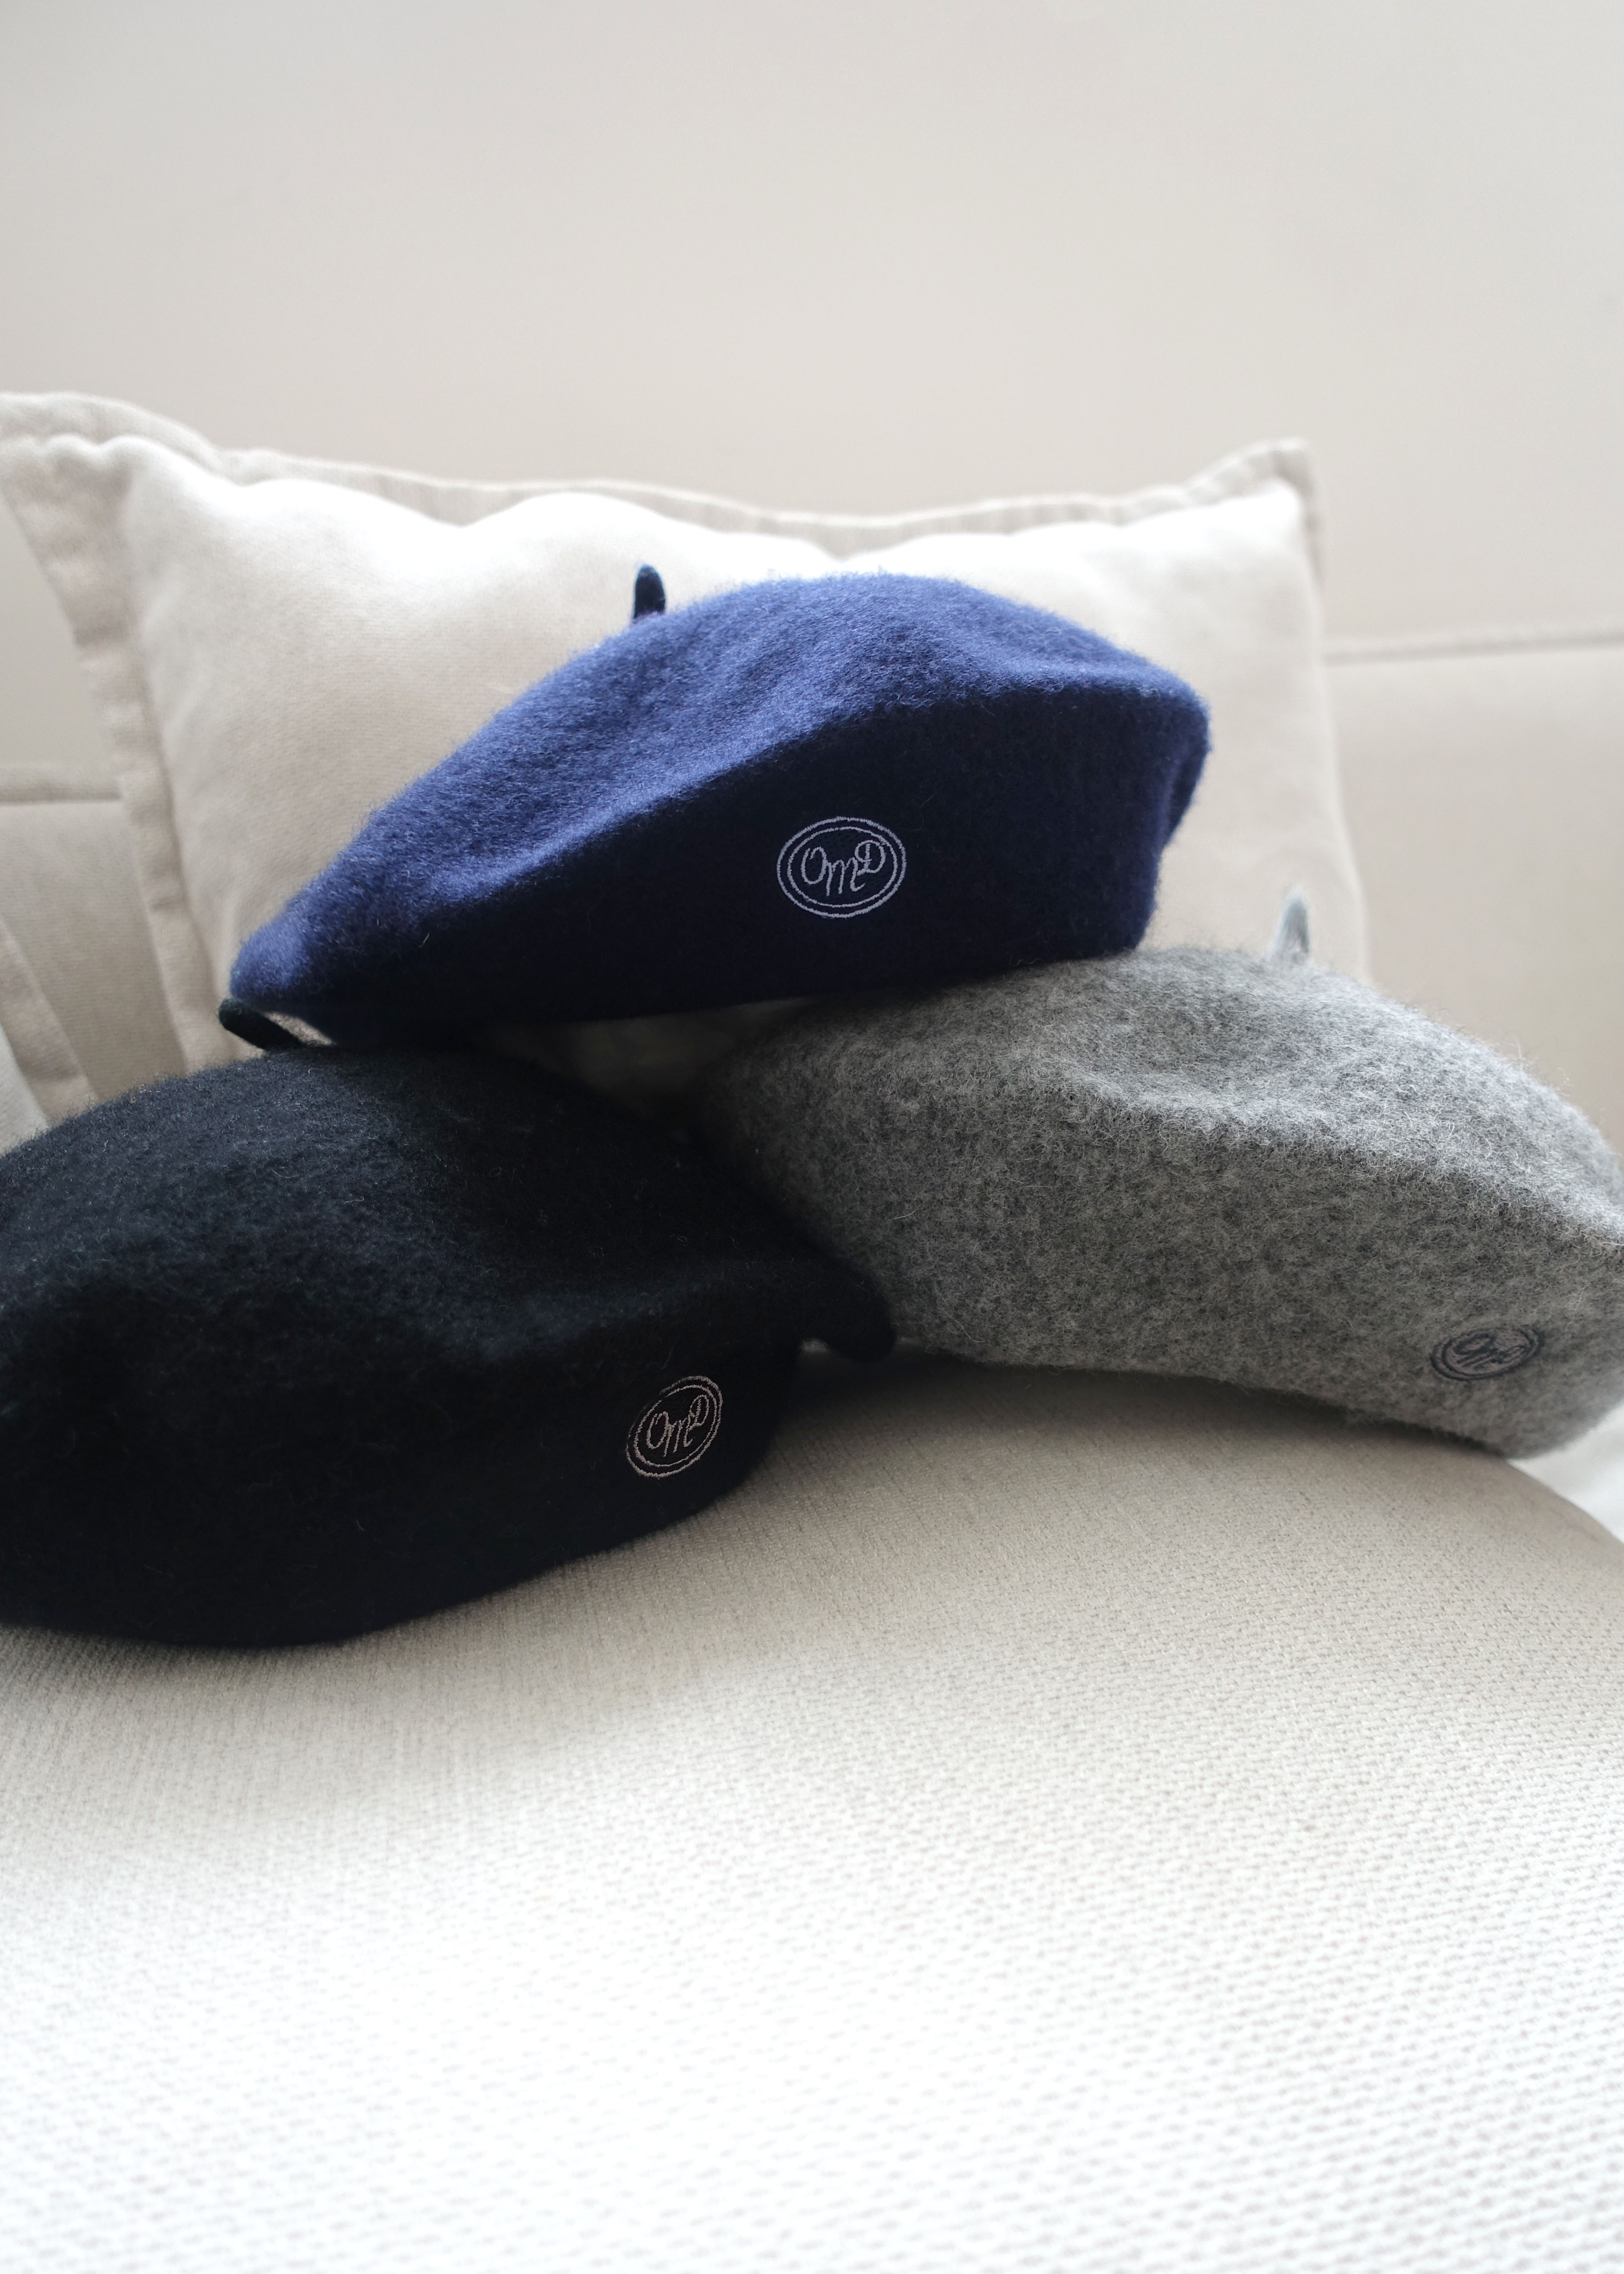 OMD wool beret (black / navy / gray)